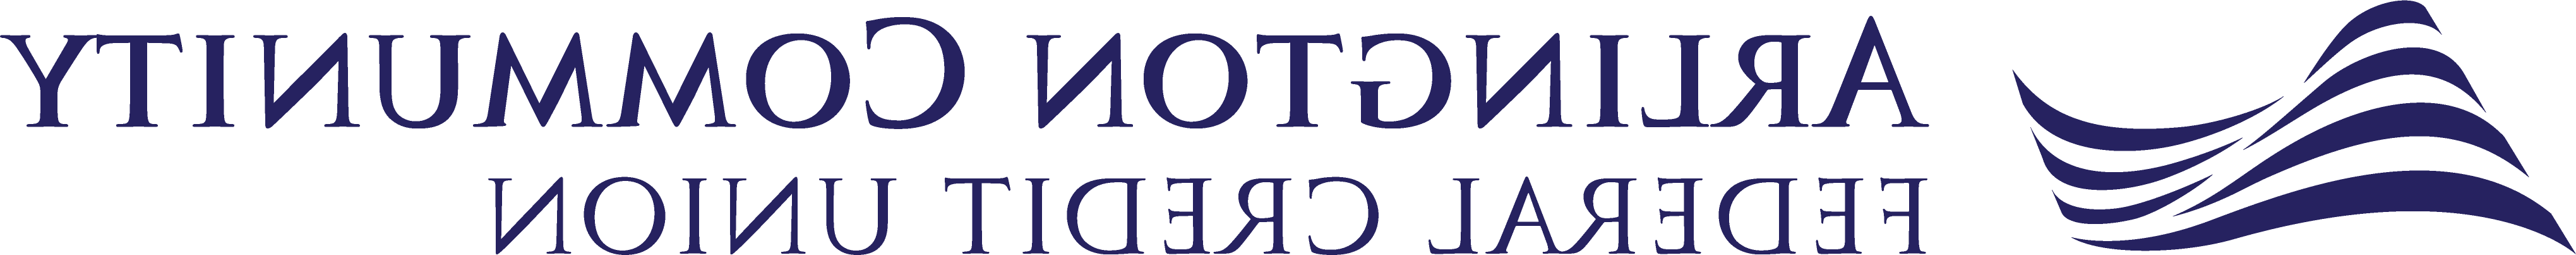 Logotipo de ArlingtonFCU